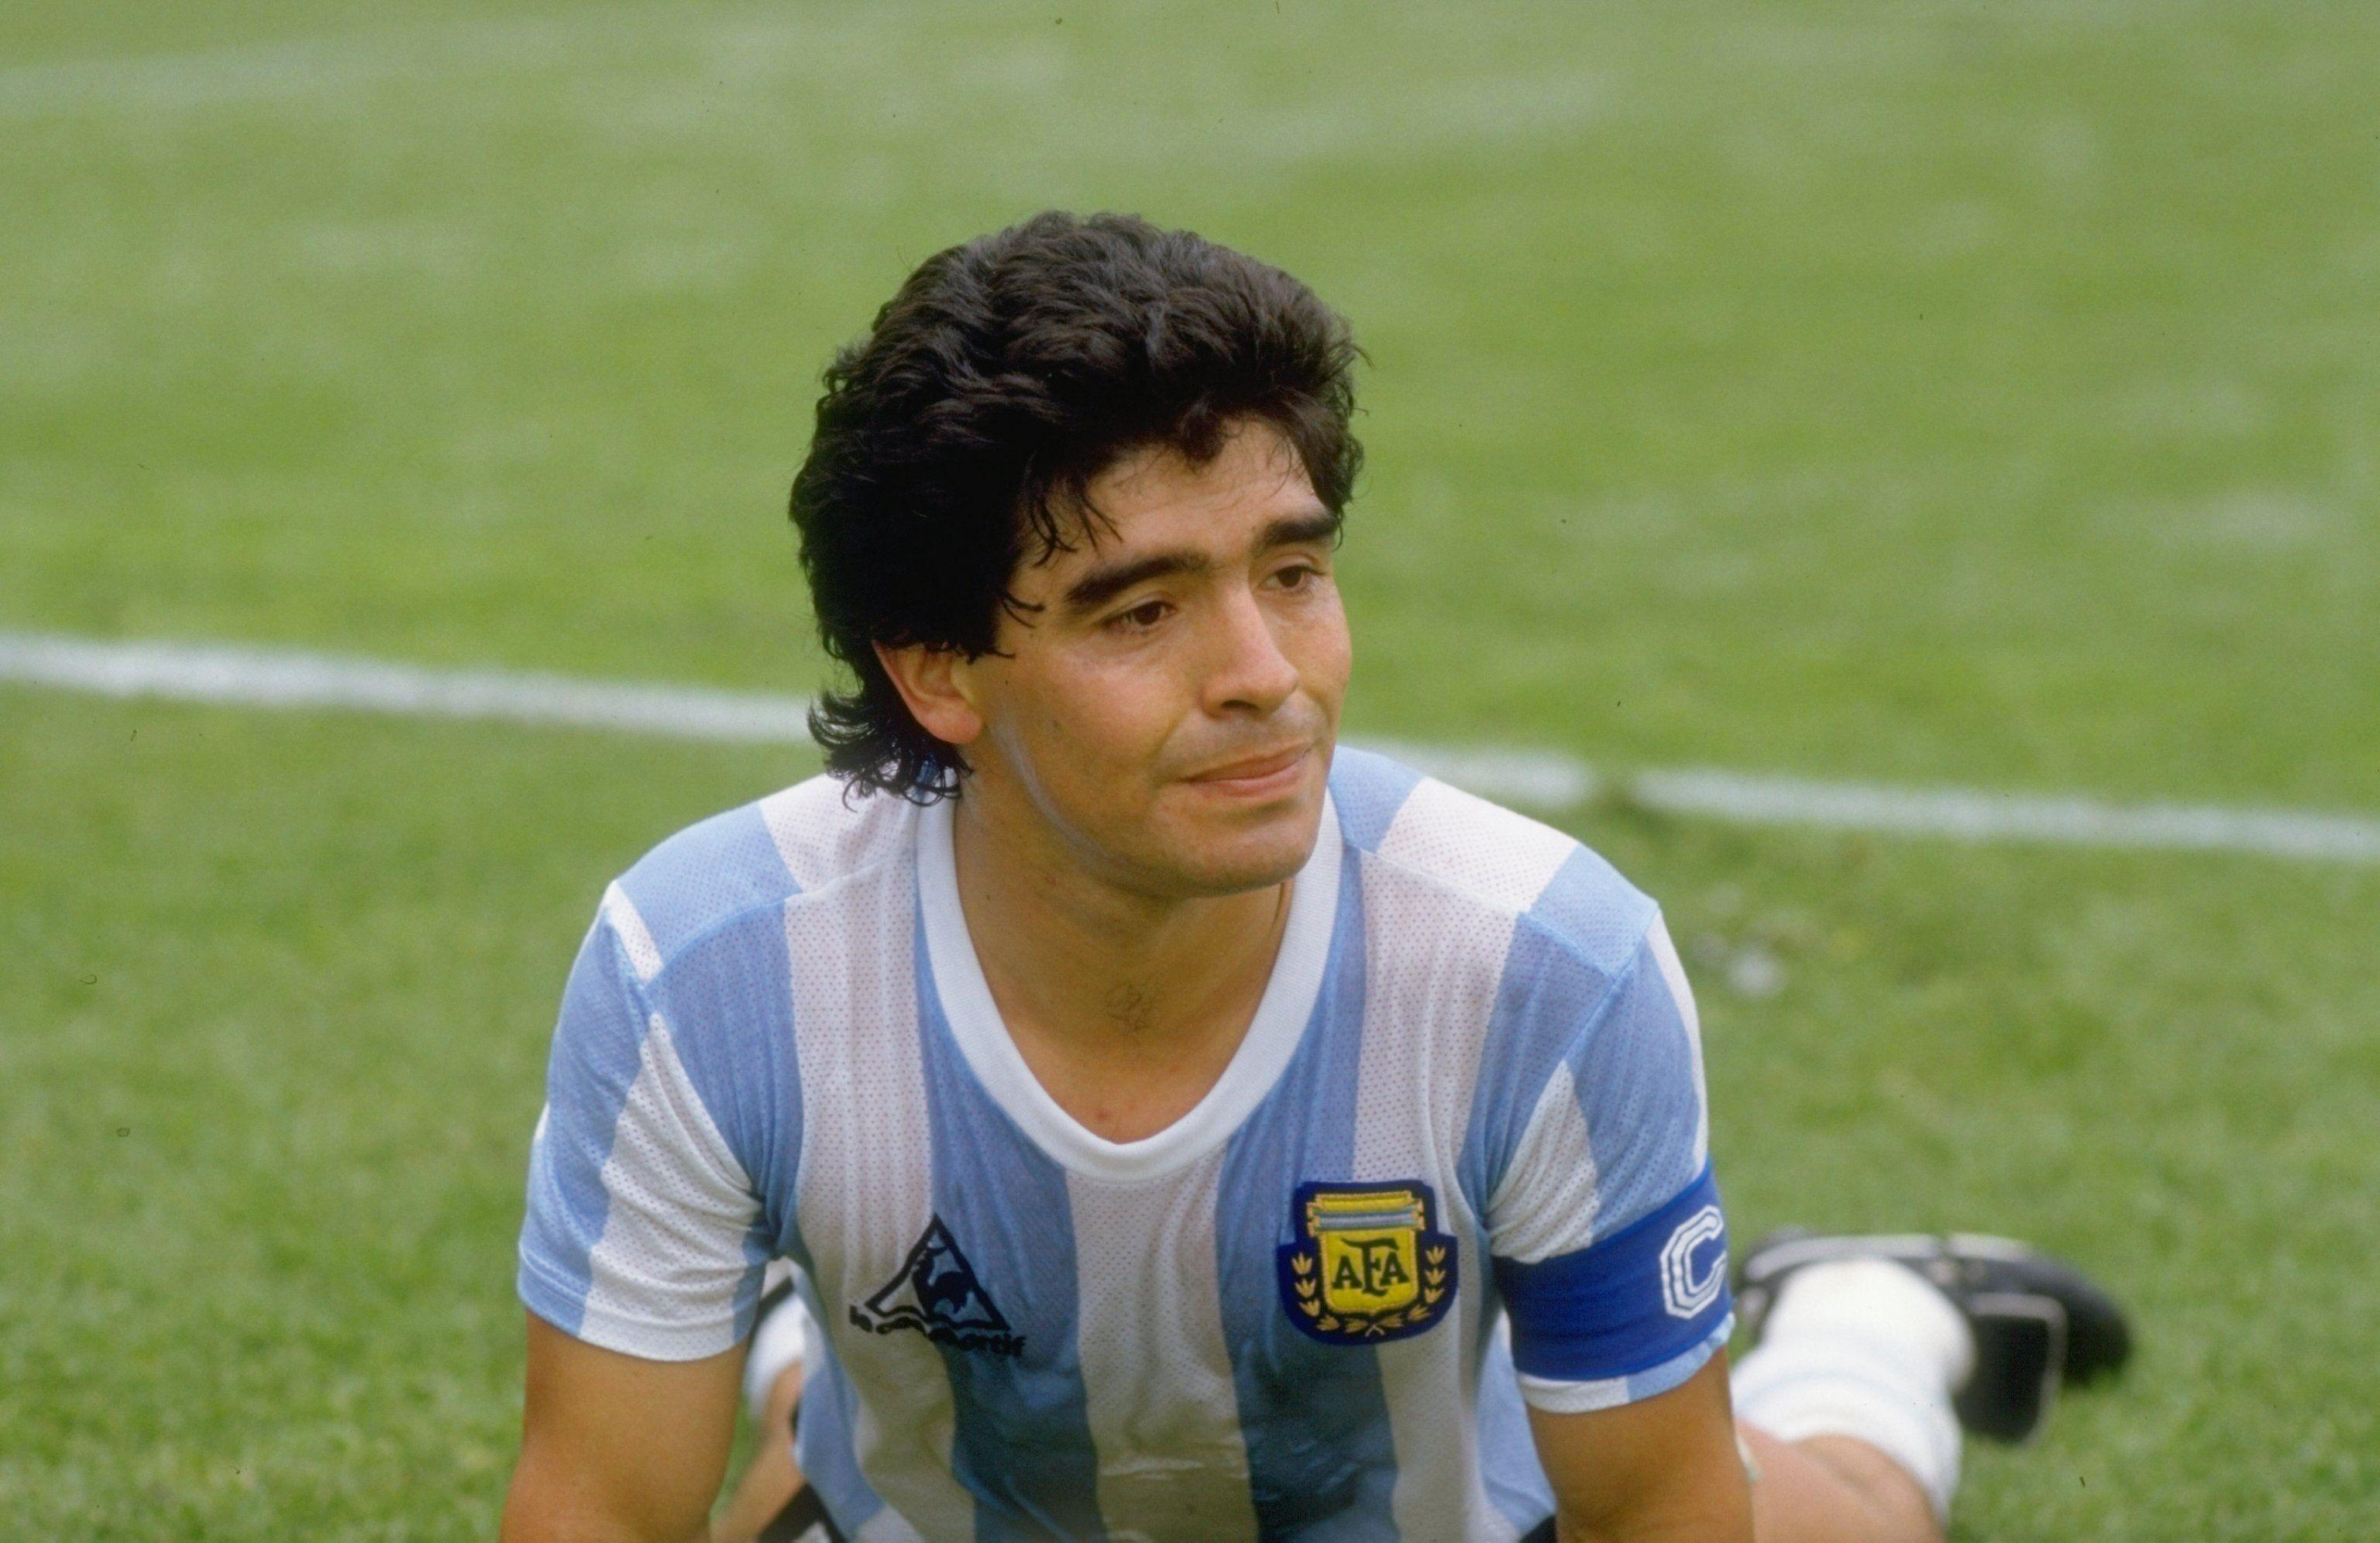 Diego Maradona of Argentina. Diego Maradona Wallpaper